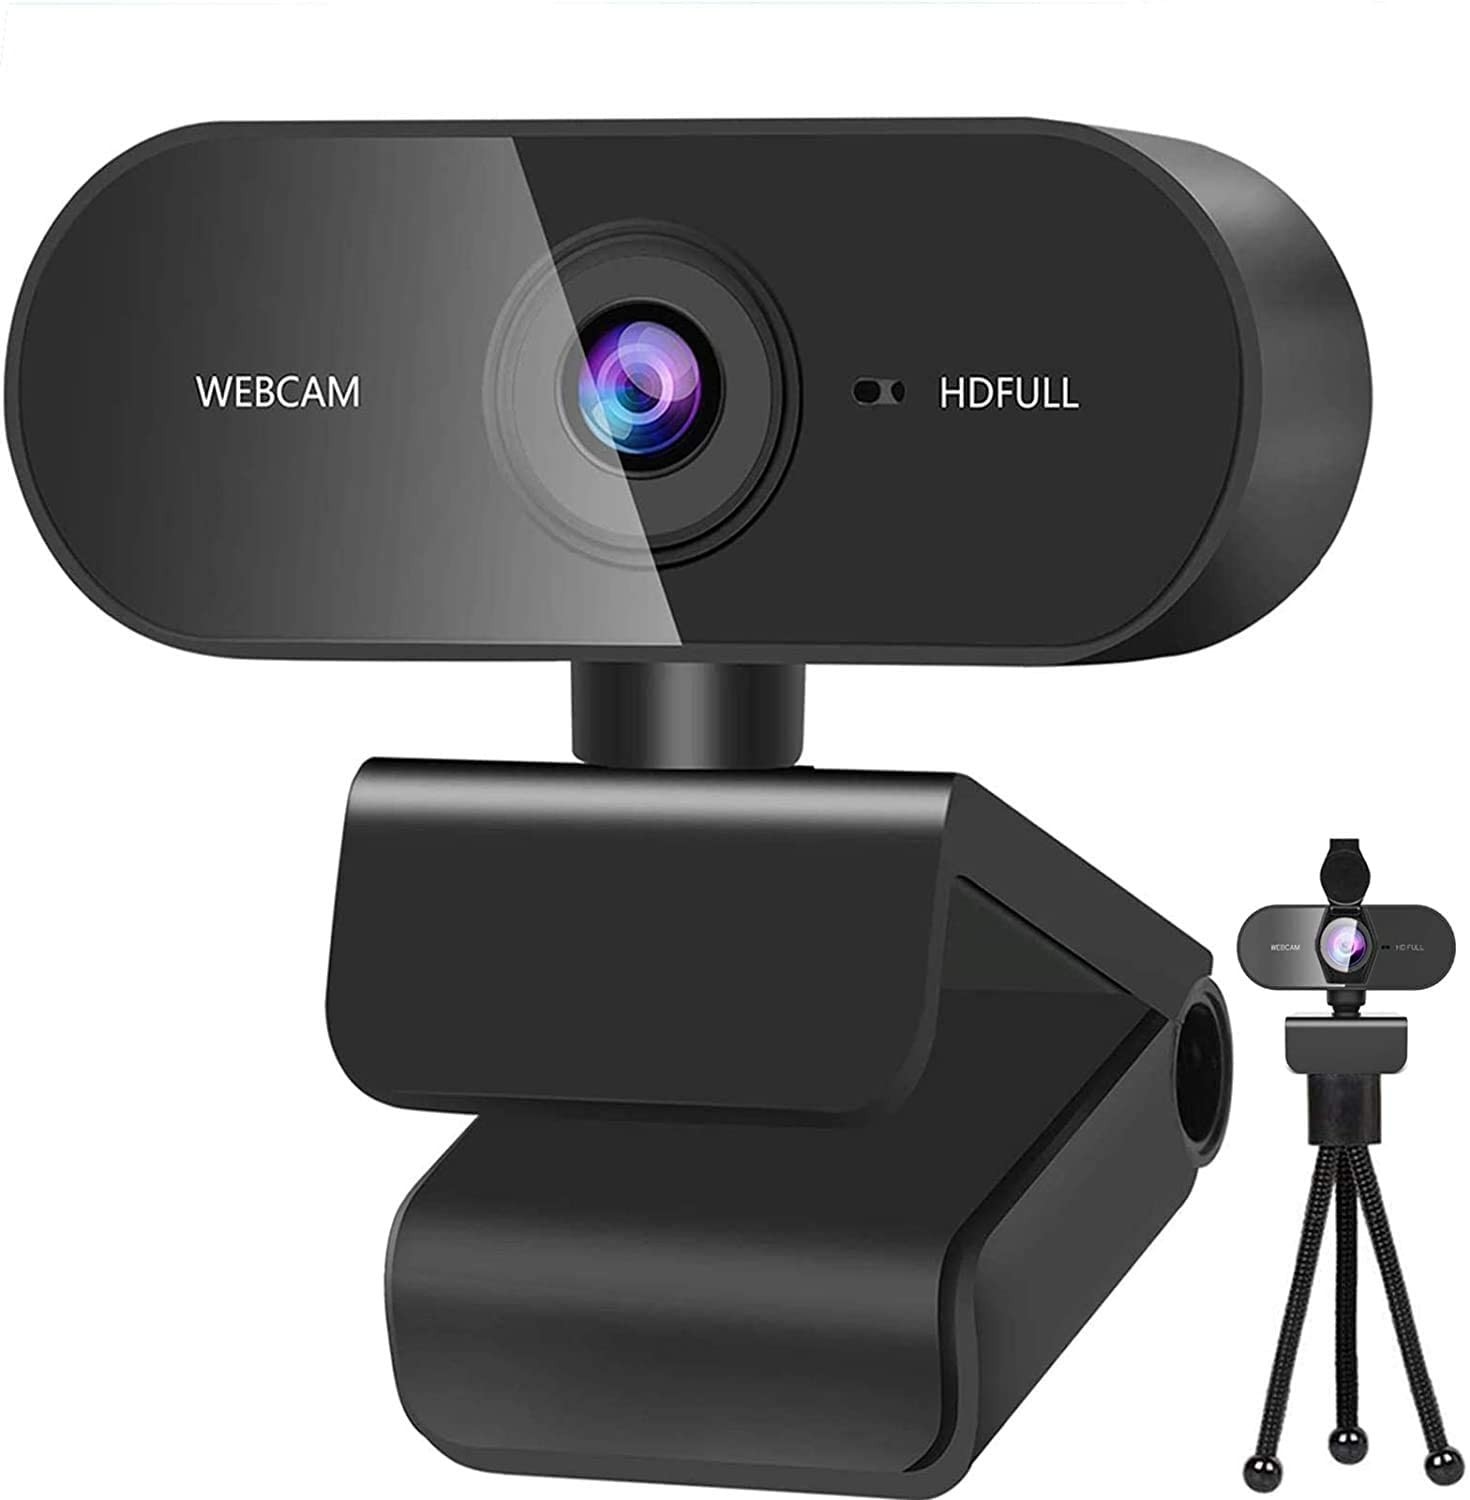 P&U 1080p 30fps USB Webcam with Microphone Black New